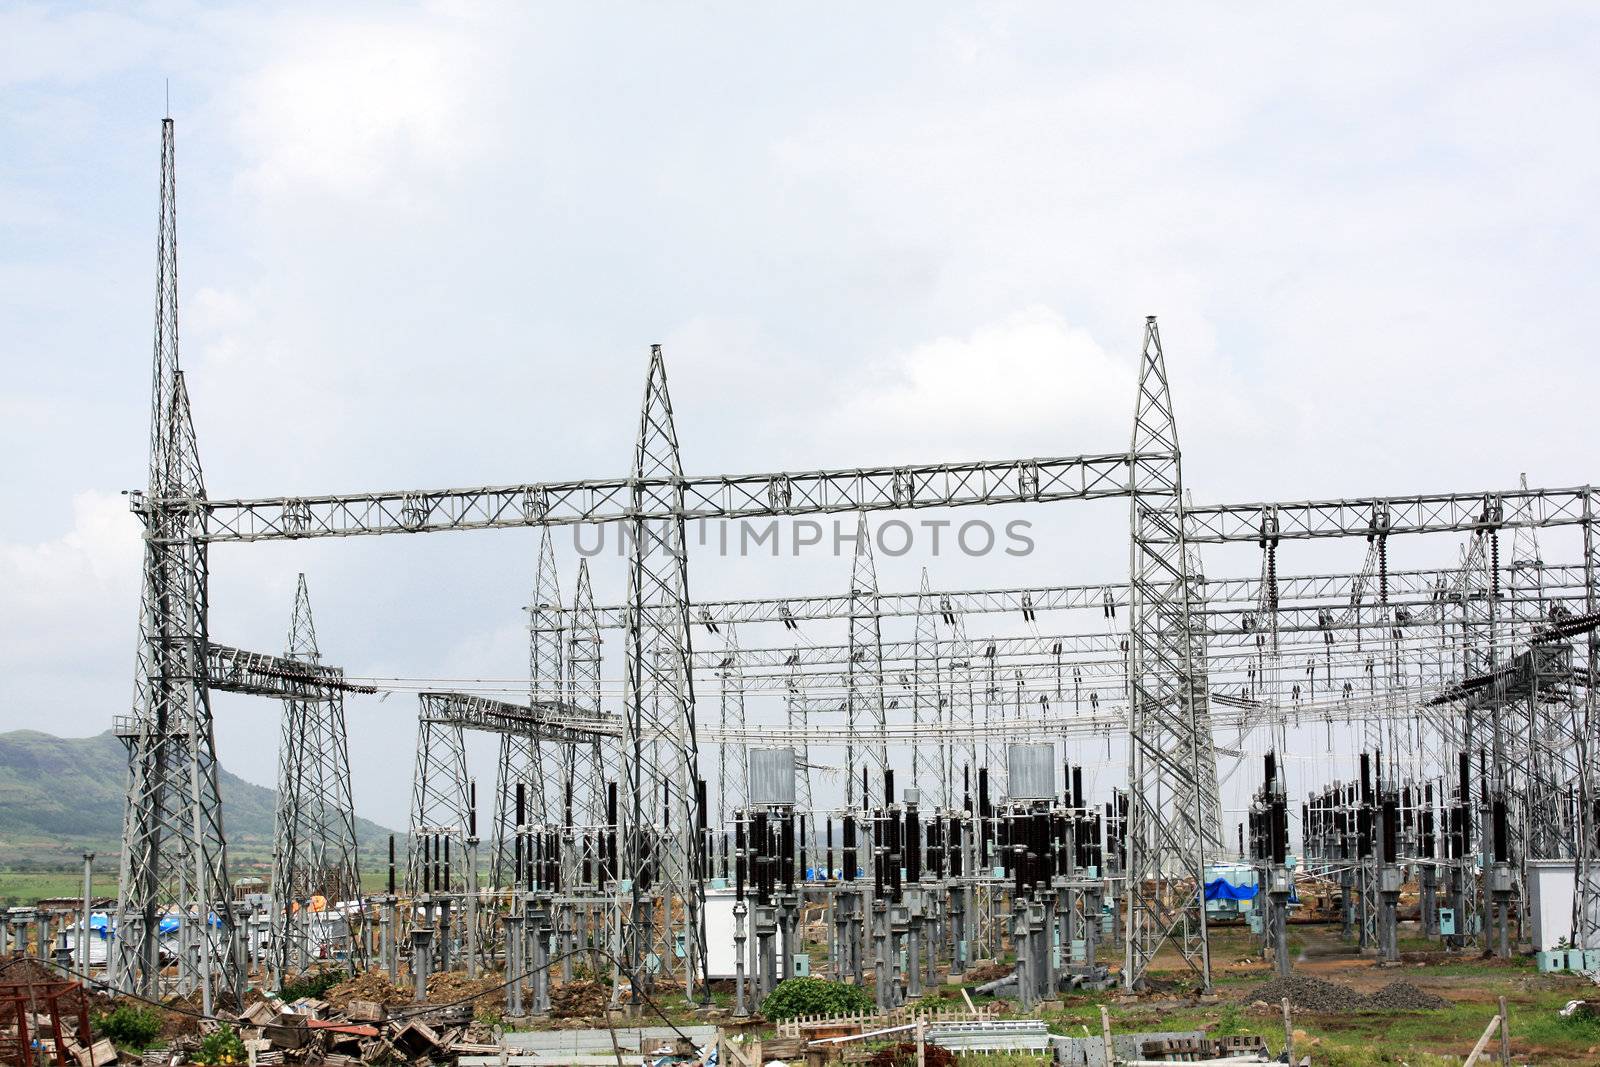 A power grid setup, near a power plant.